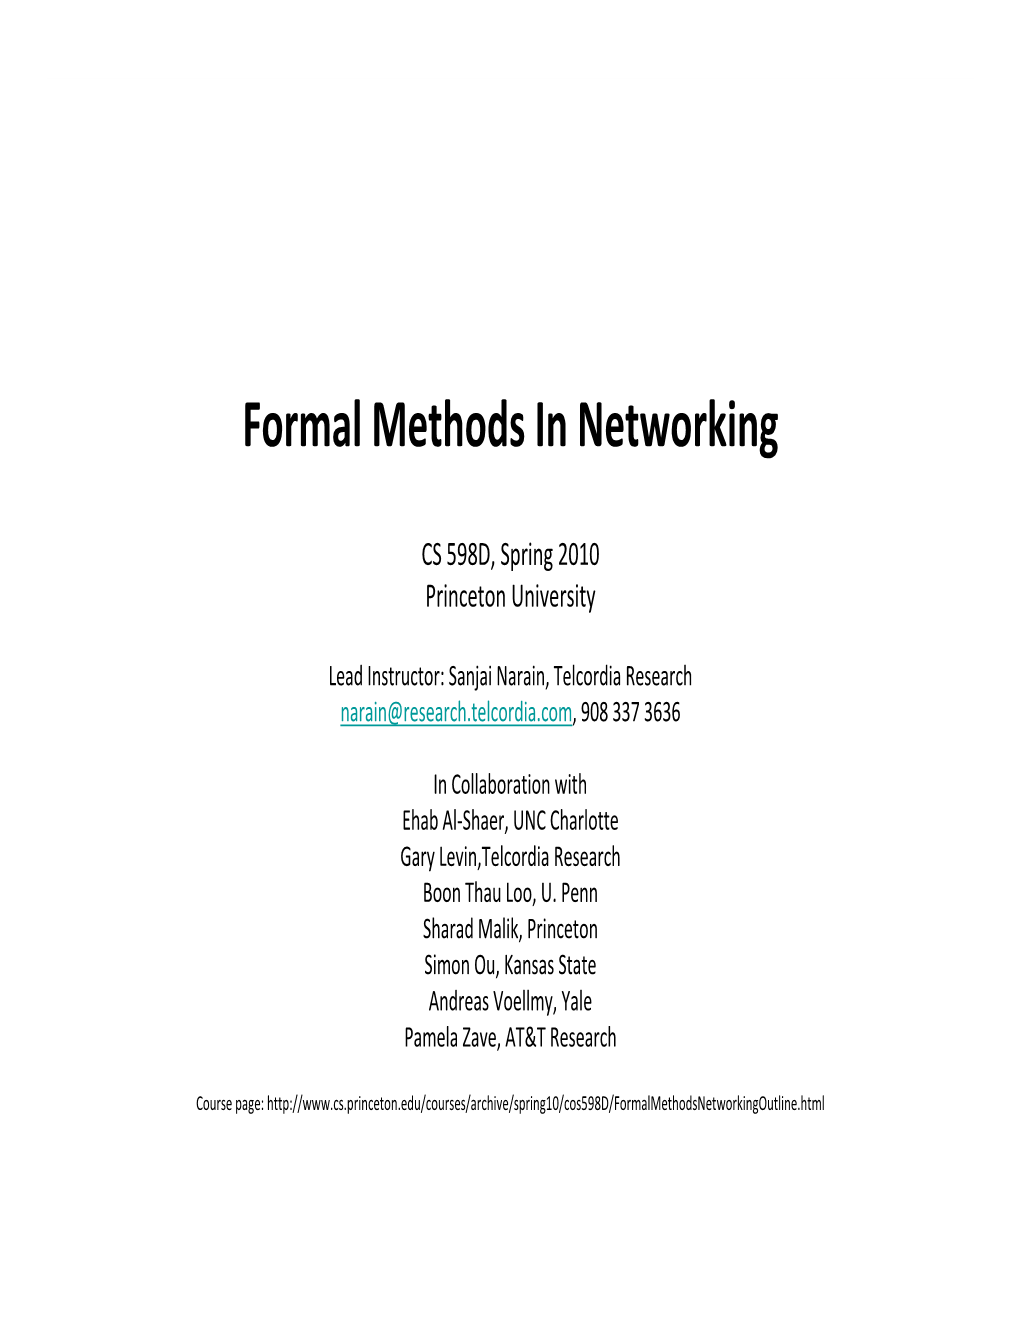 Formal Methods in Networking